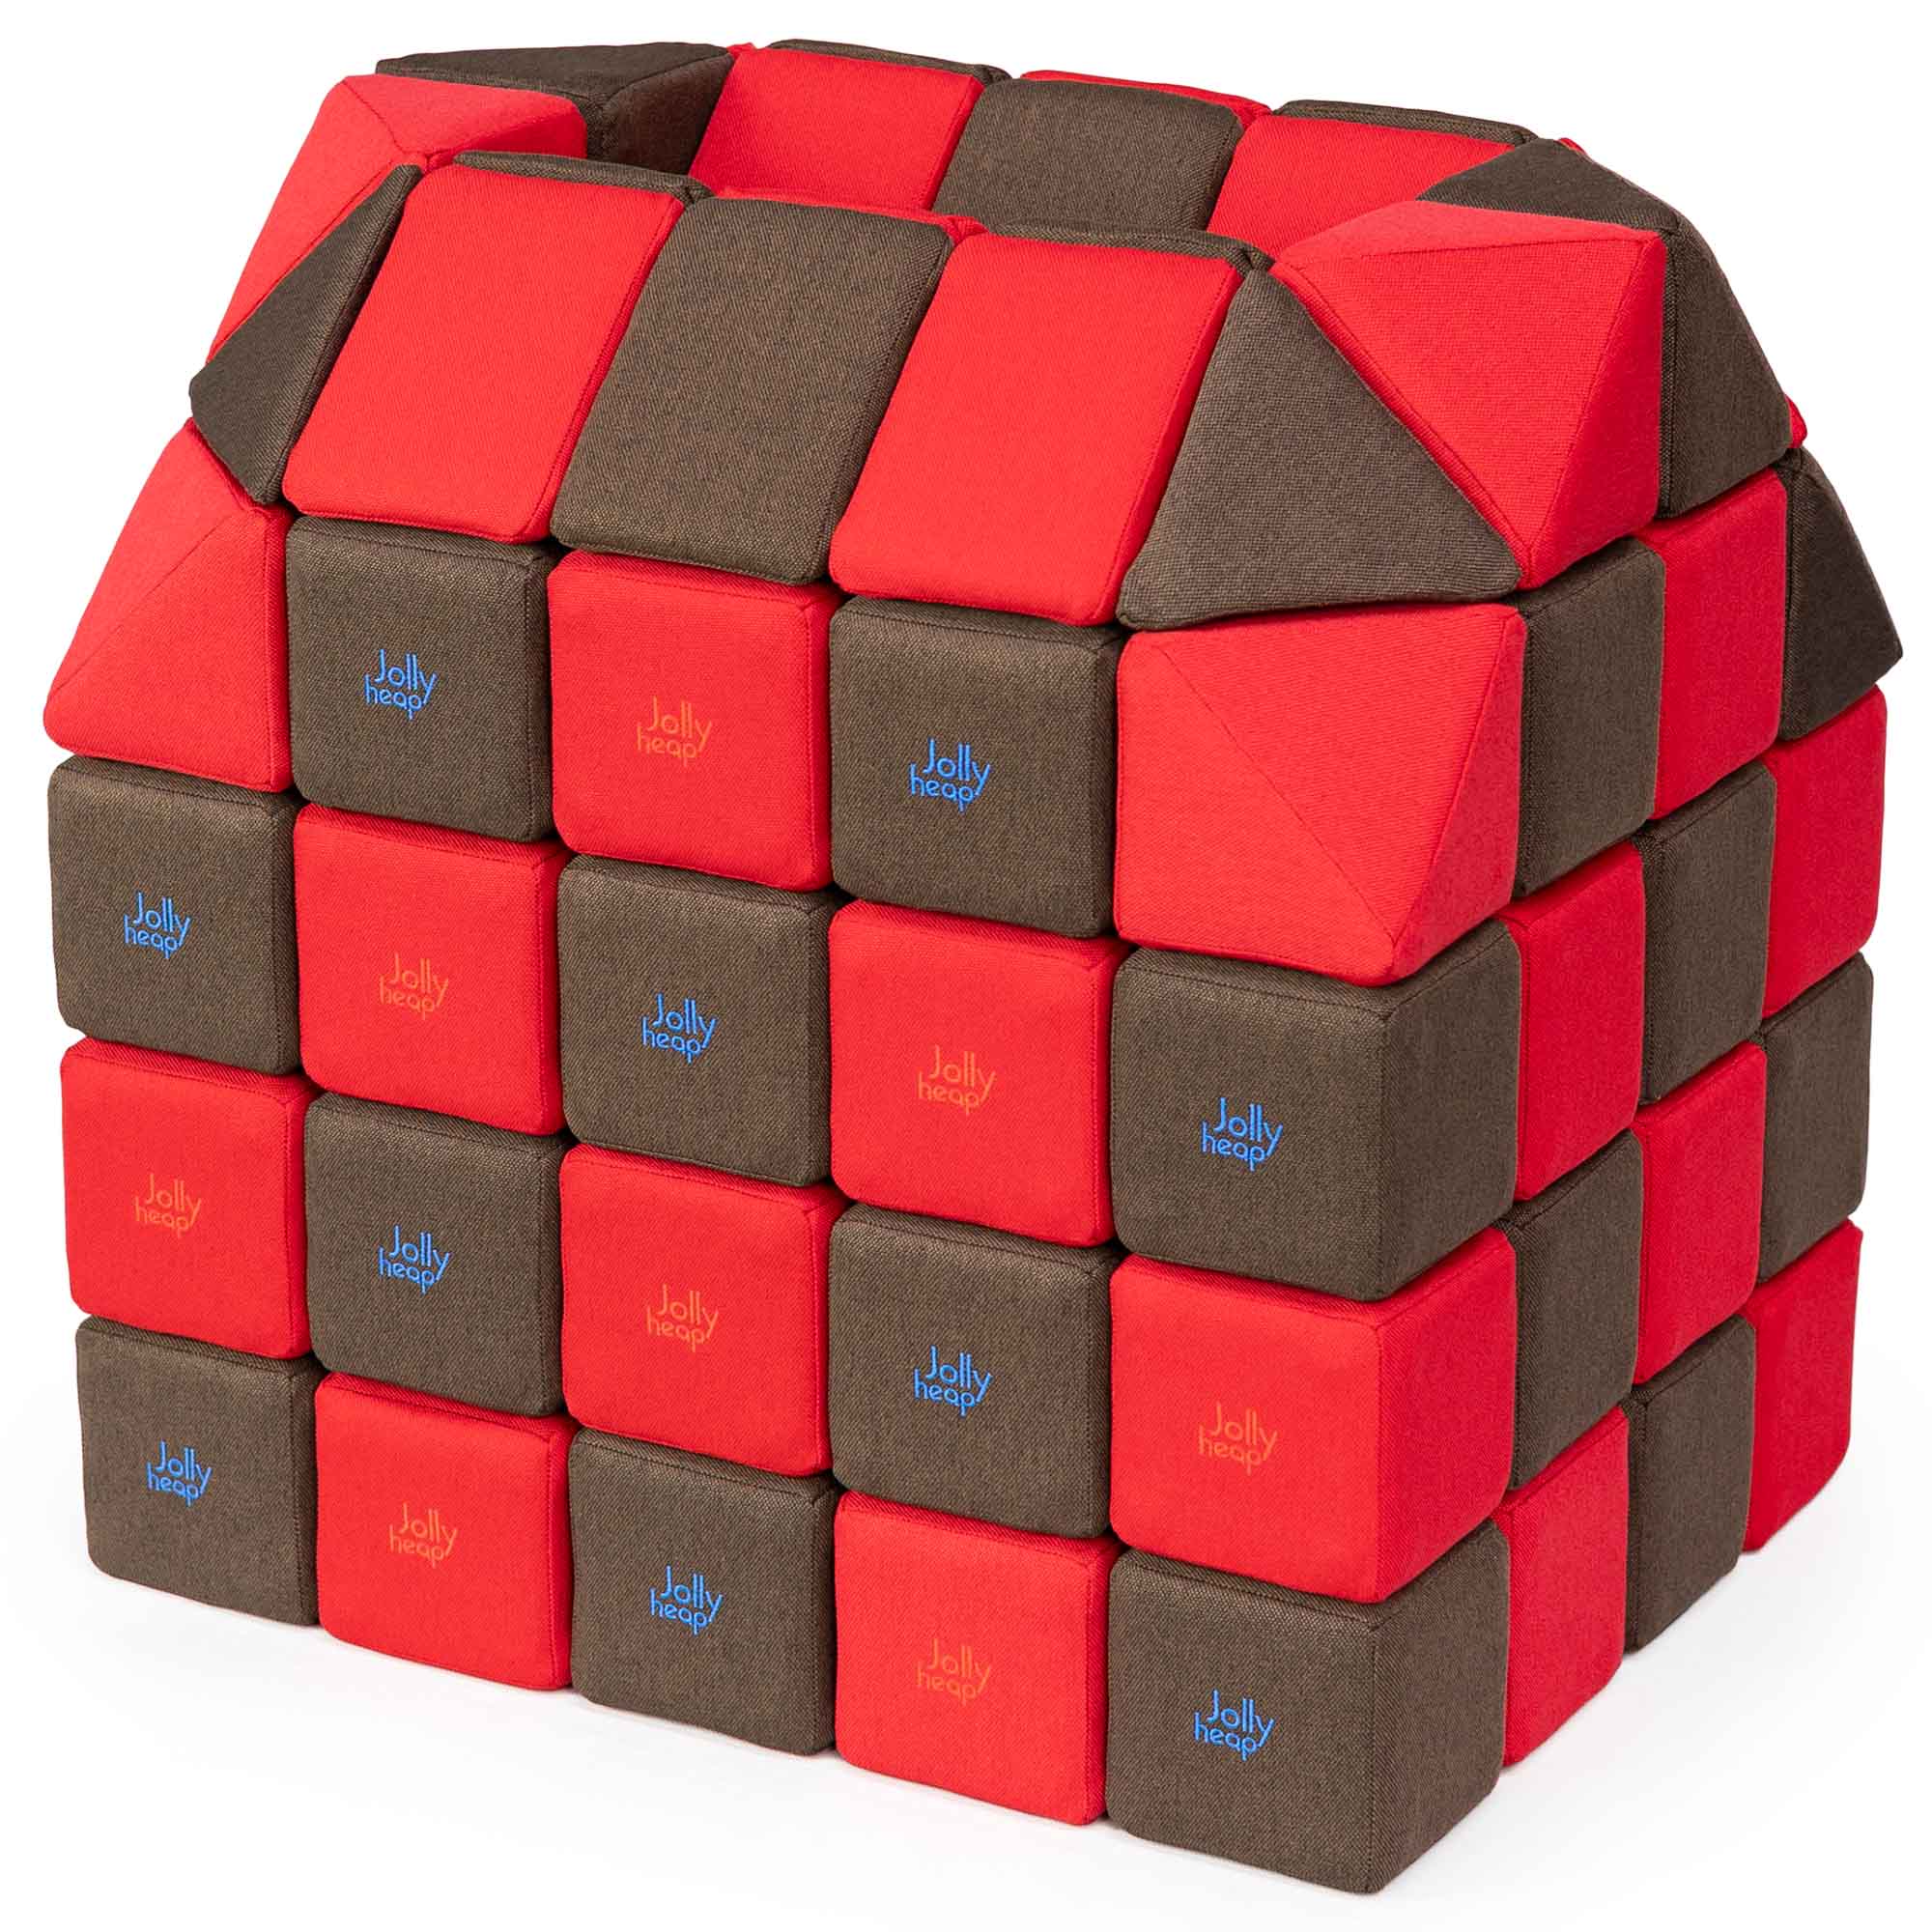 
  
  Little House - JollyHeap Magnetic Blocks
  
